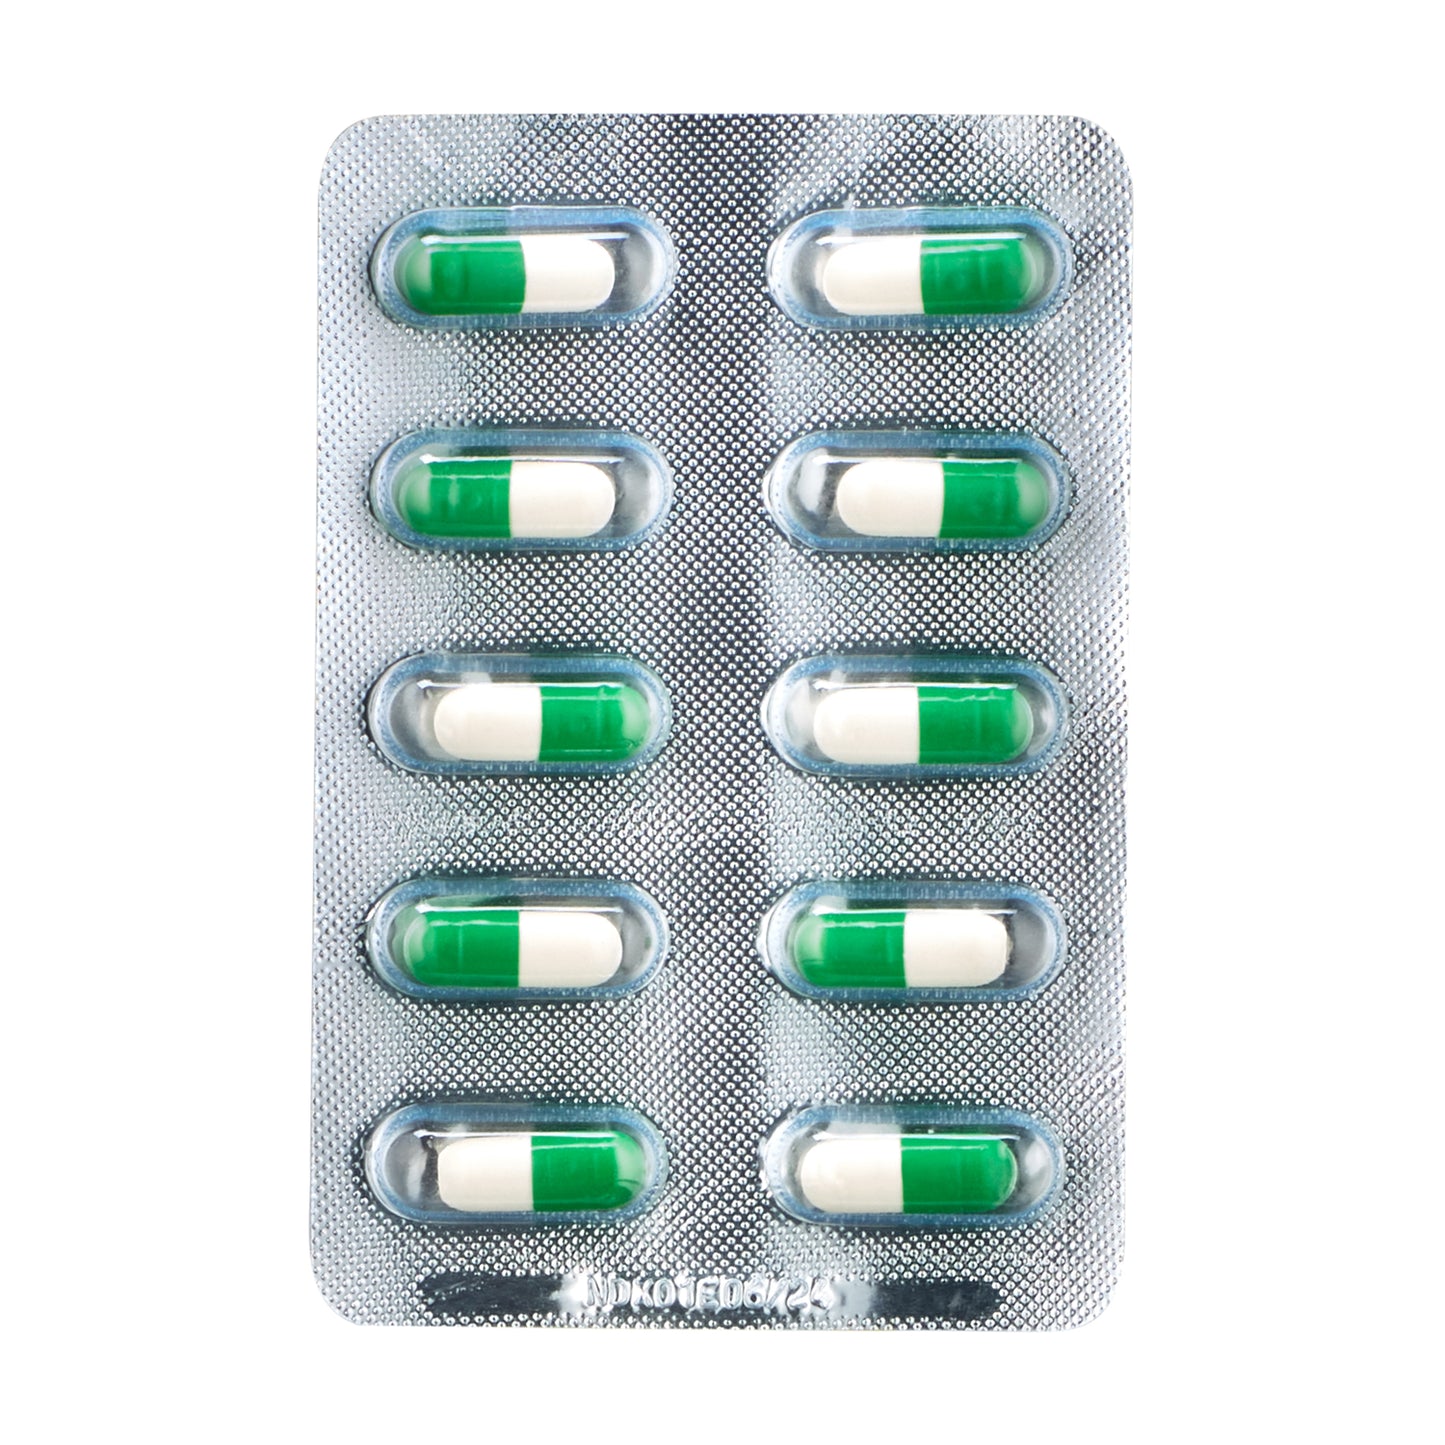 [Rx] DOXYSAPH Doxycycline Capsule 100mg (Per Capsule) | DMD Patient-Exclusive